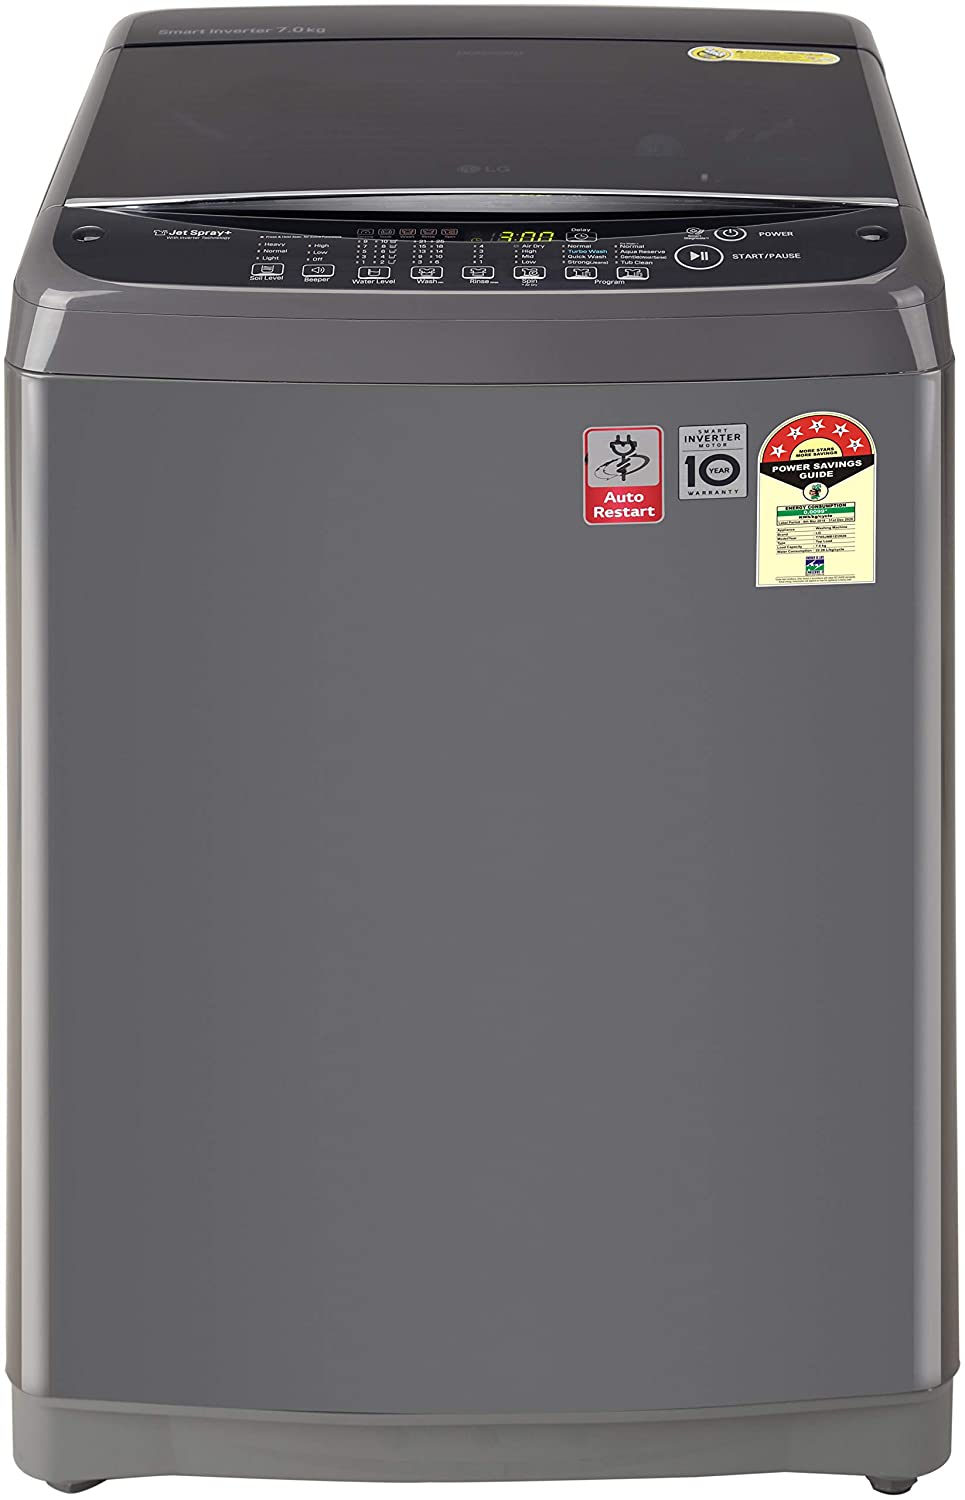 LG Washing Machine T70SJMB1Z 7 kg